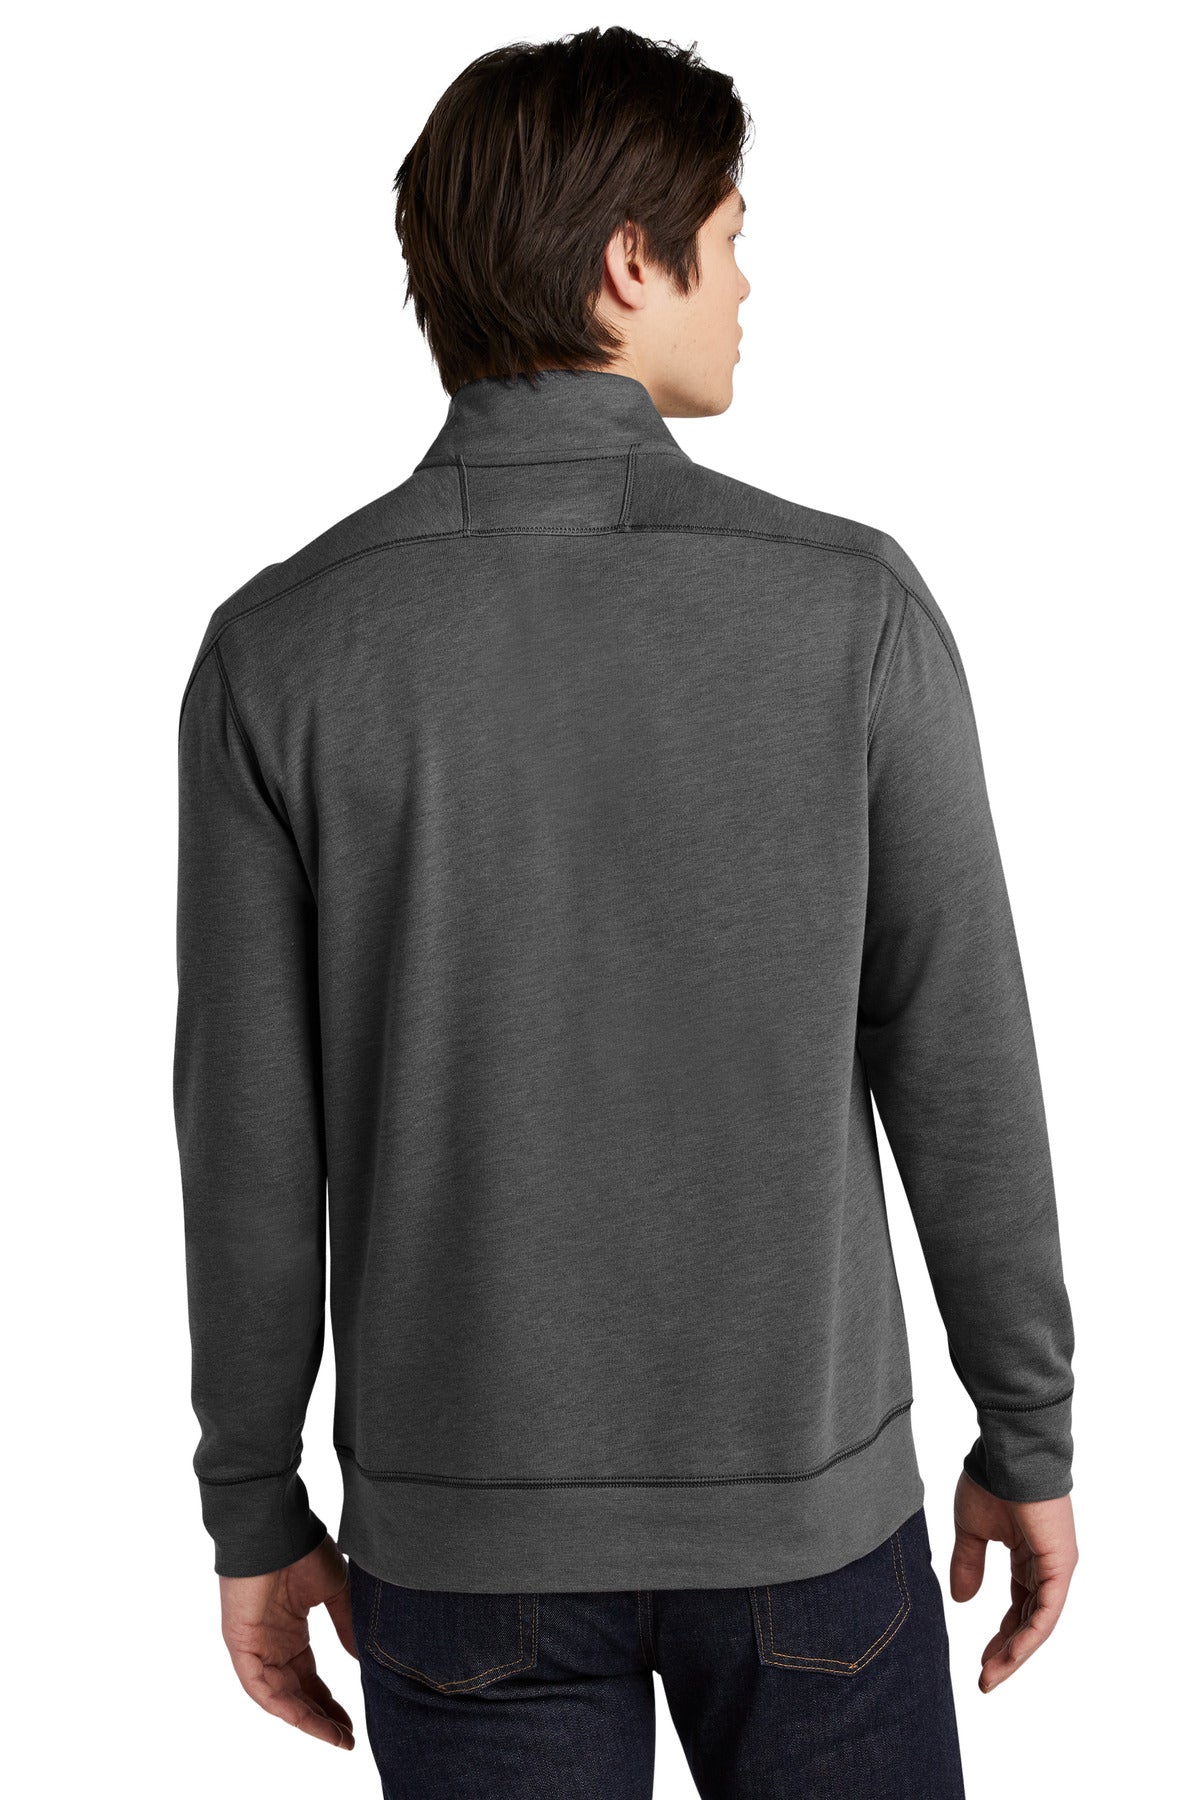 New Era ® Tri-Blend Fleece 1/4-Zip Pullover. NEA512 - DFW Impression